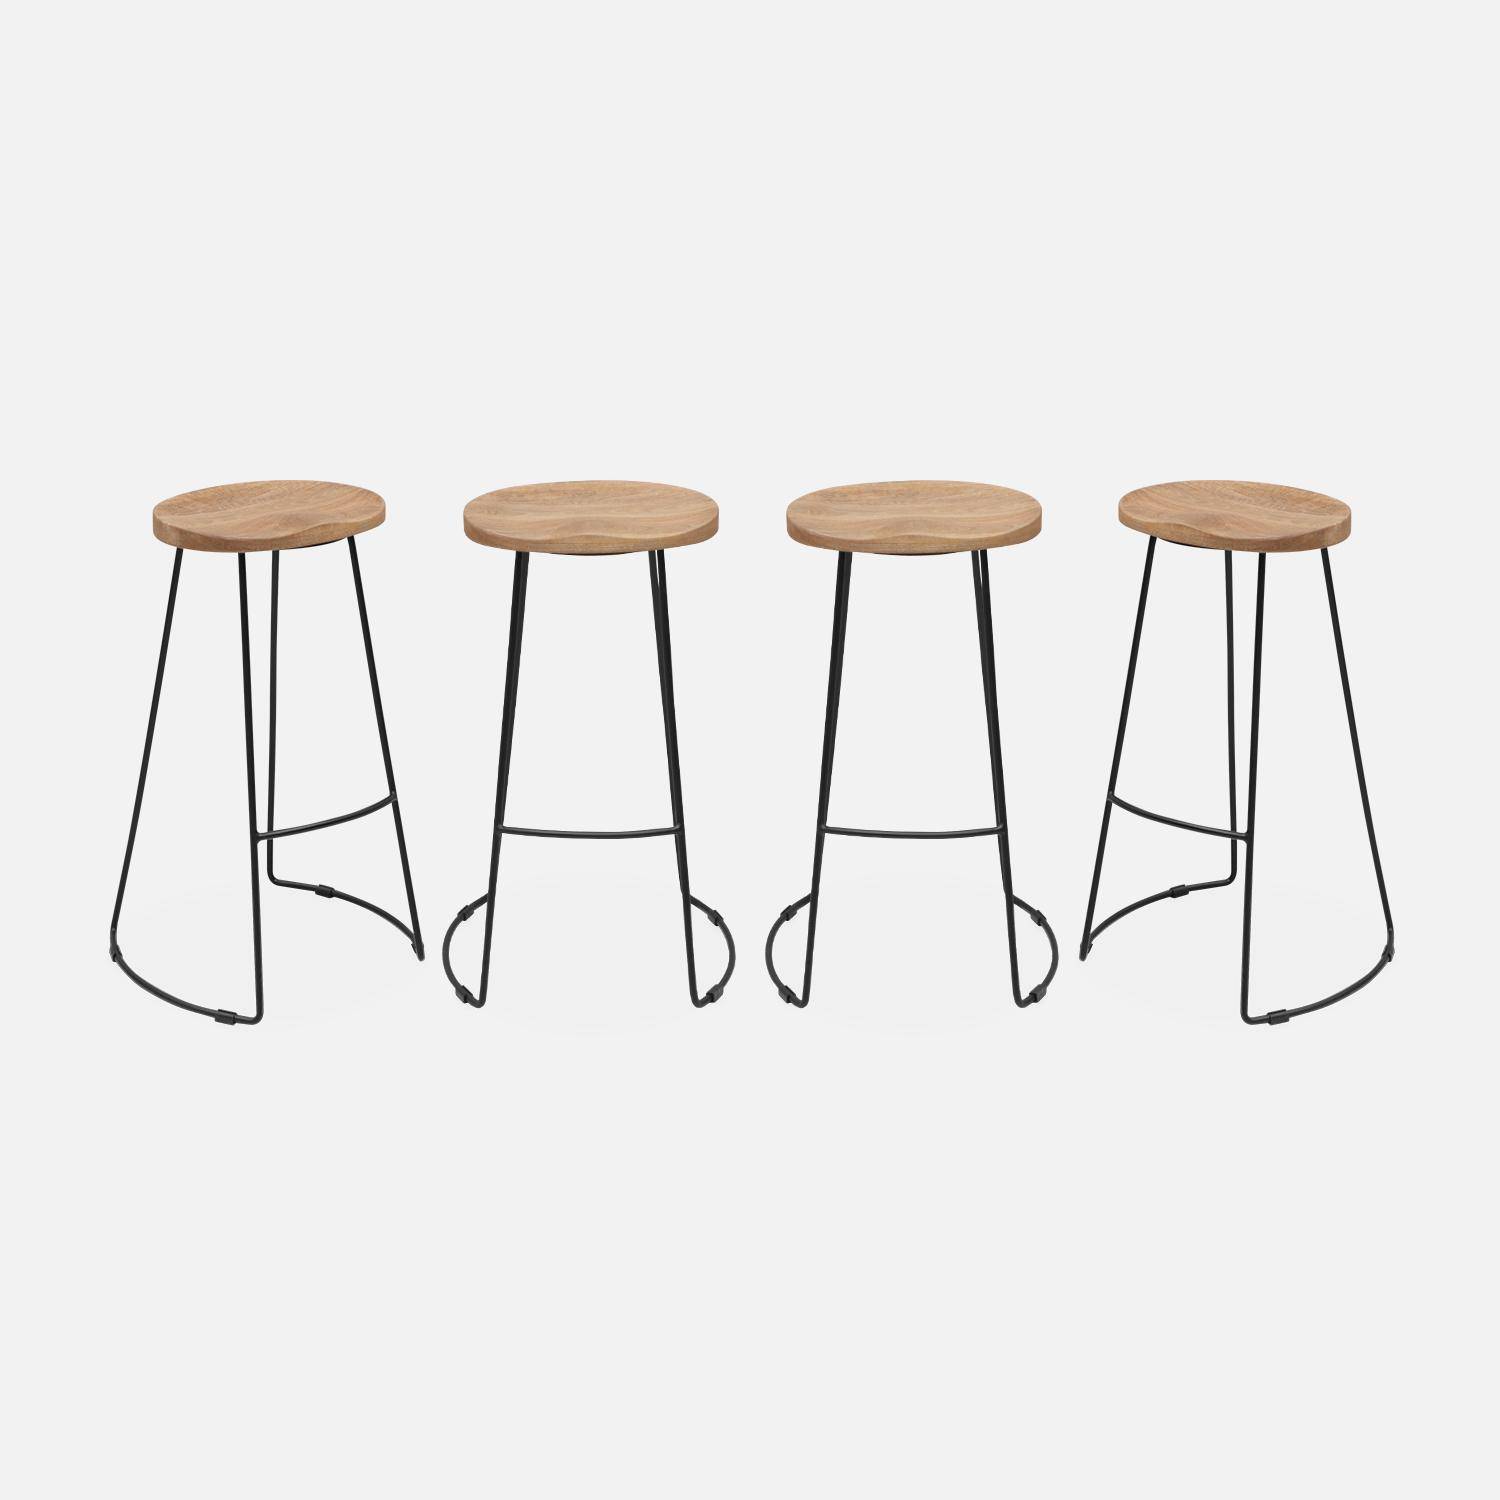 Set of 4 industrial metal and wooden bar stools, 47x40x75cm, Jaya, Mango wood seat, black metal legs Photo3